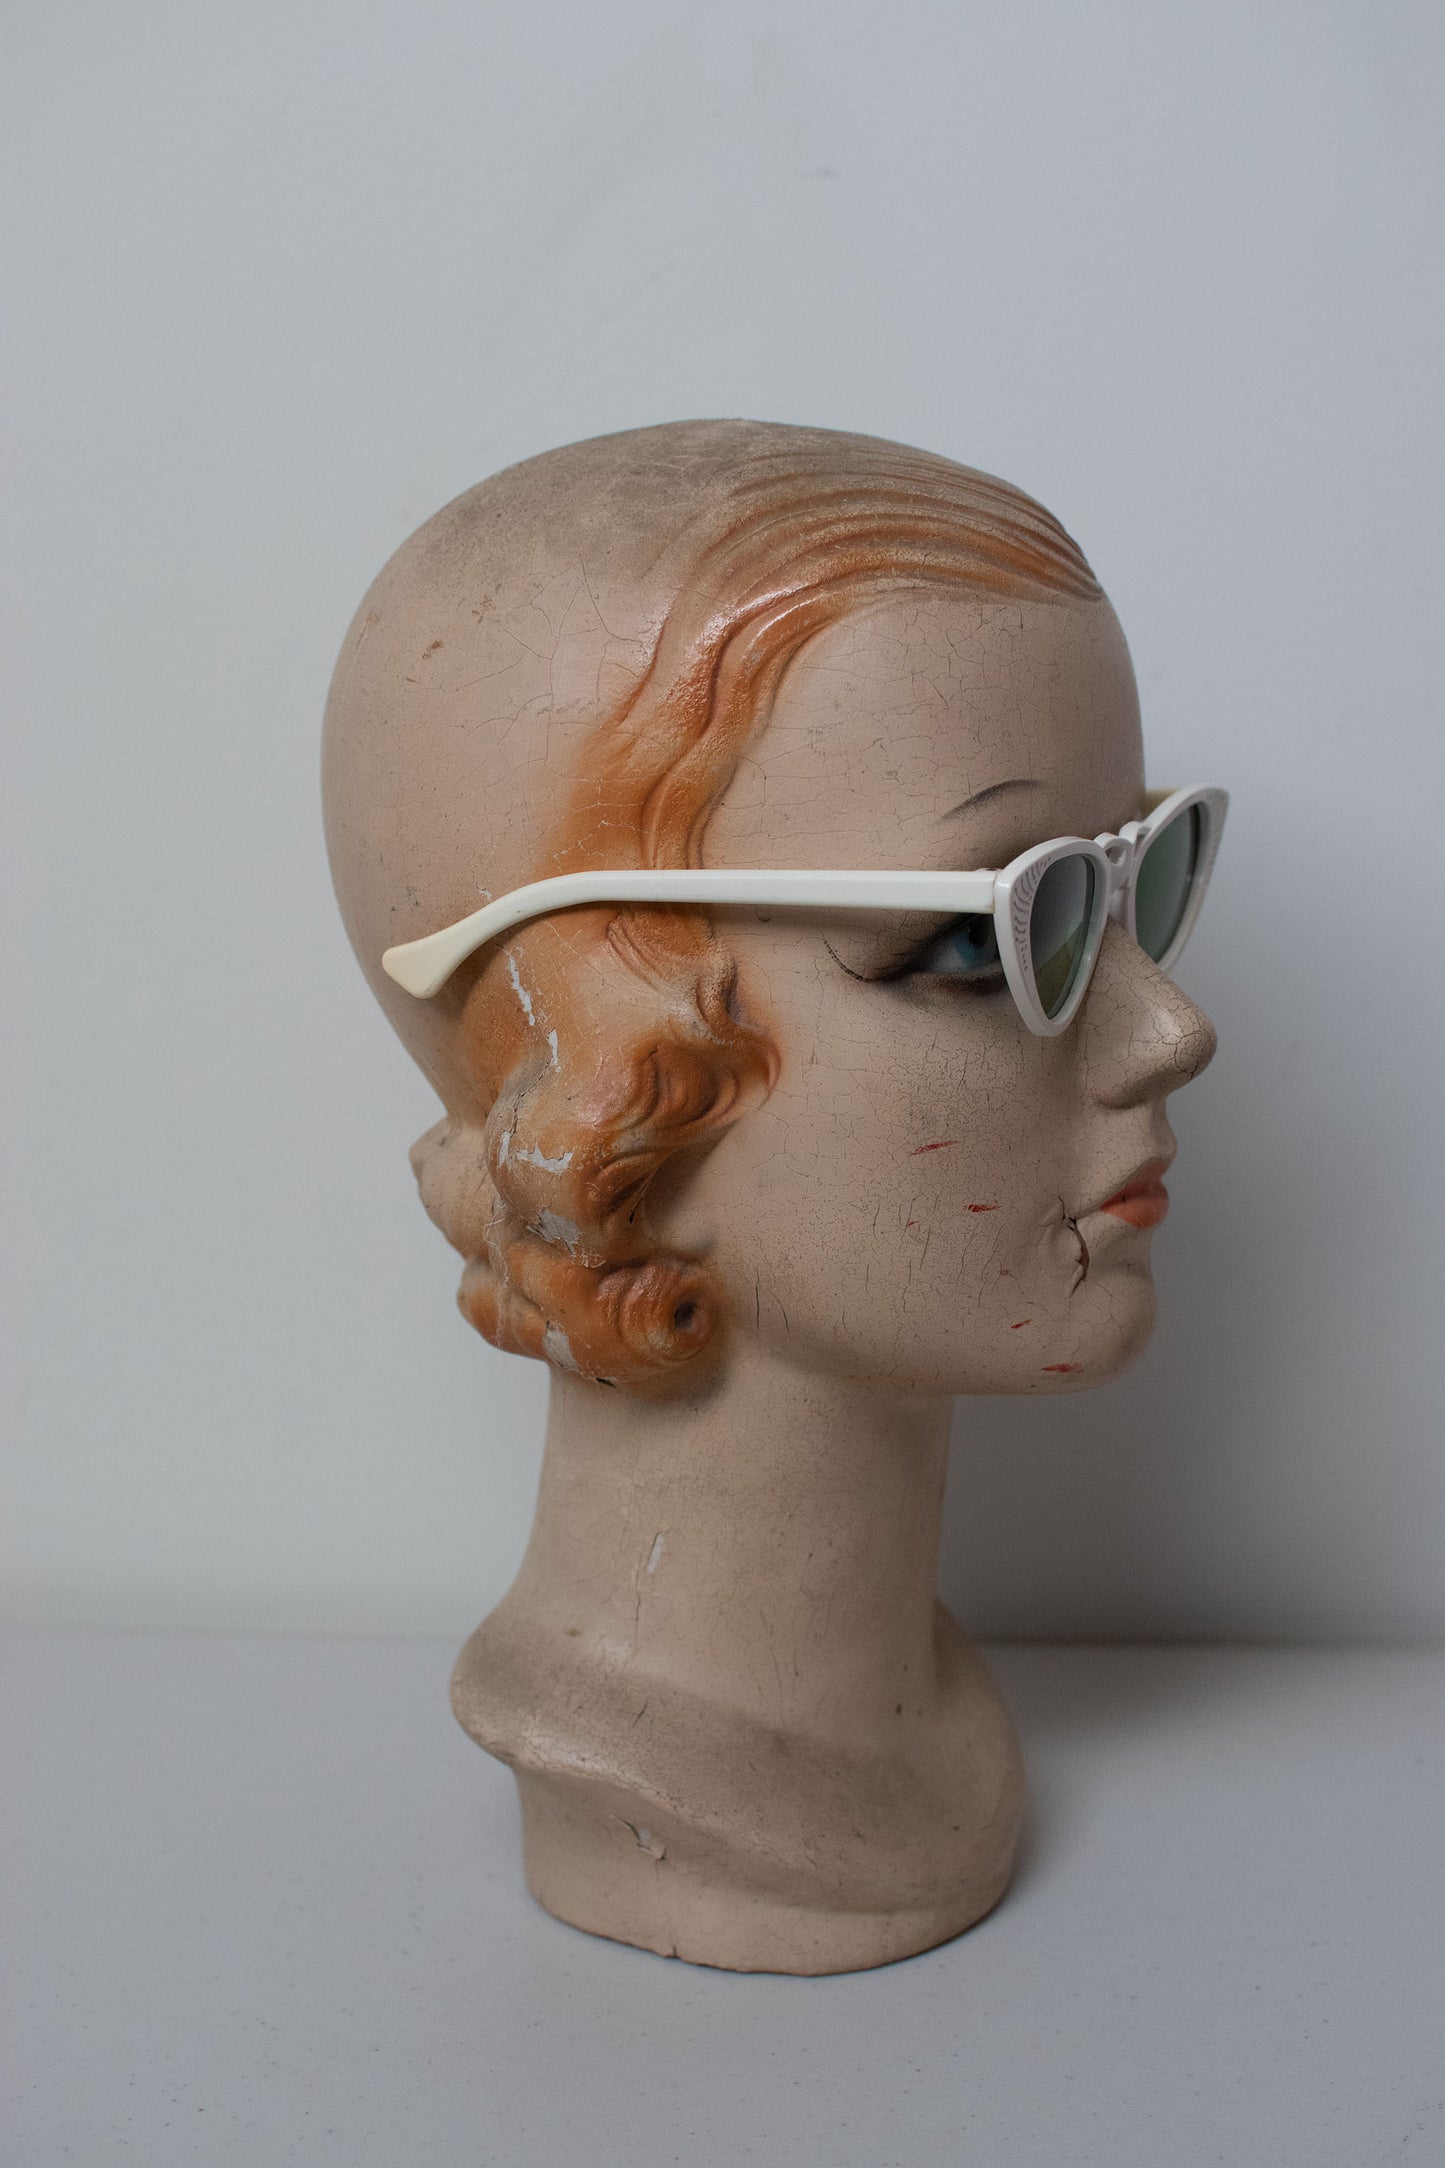 1950s Sunglasses | White Cat Eye